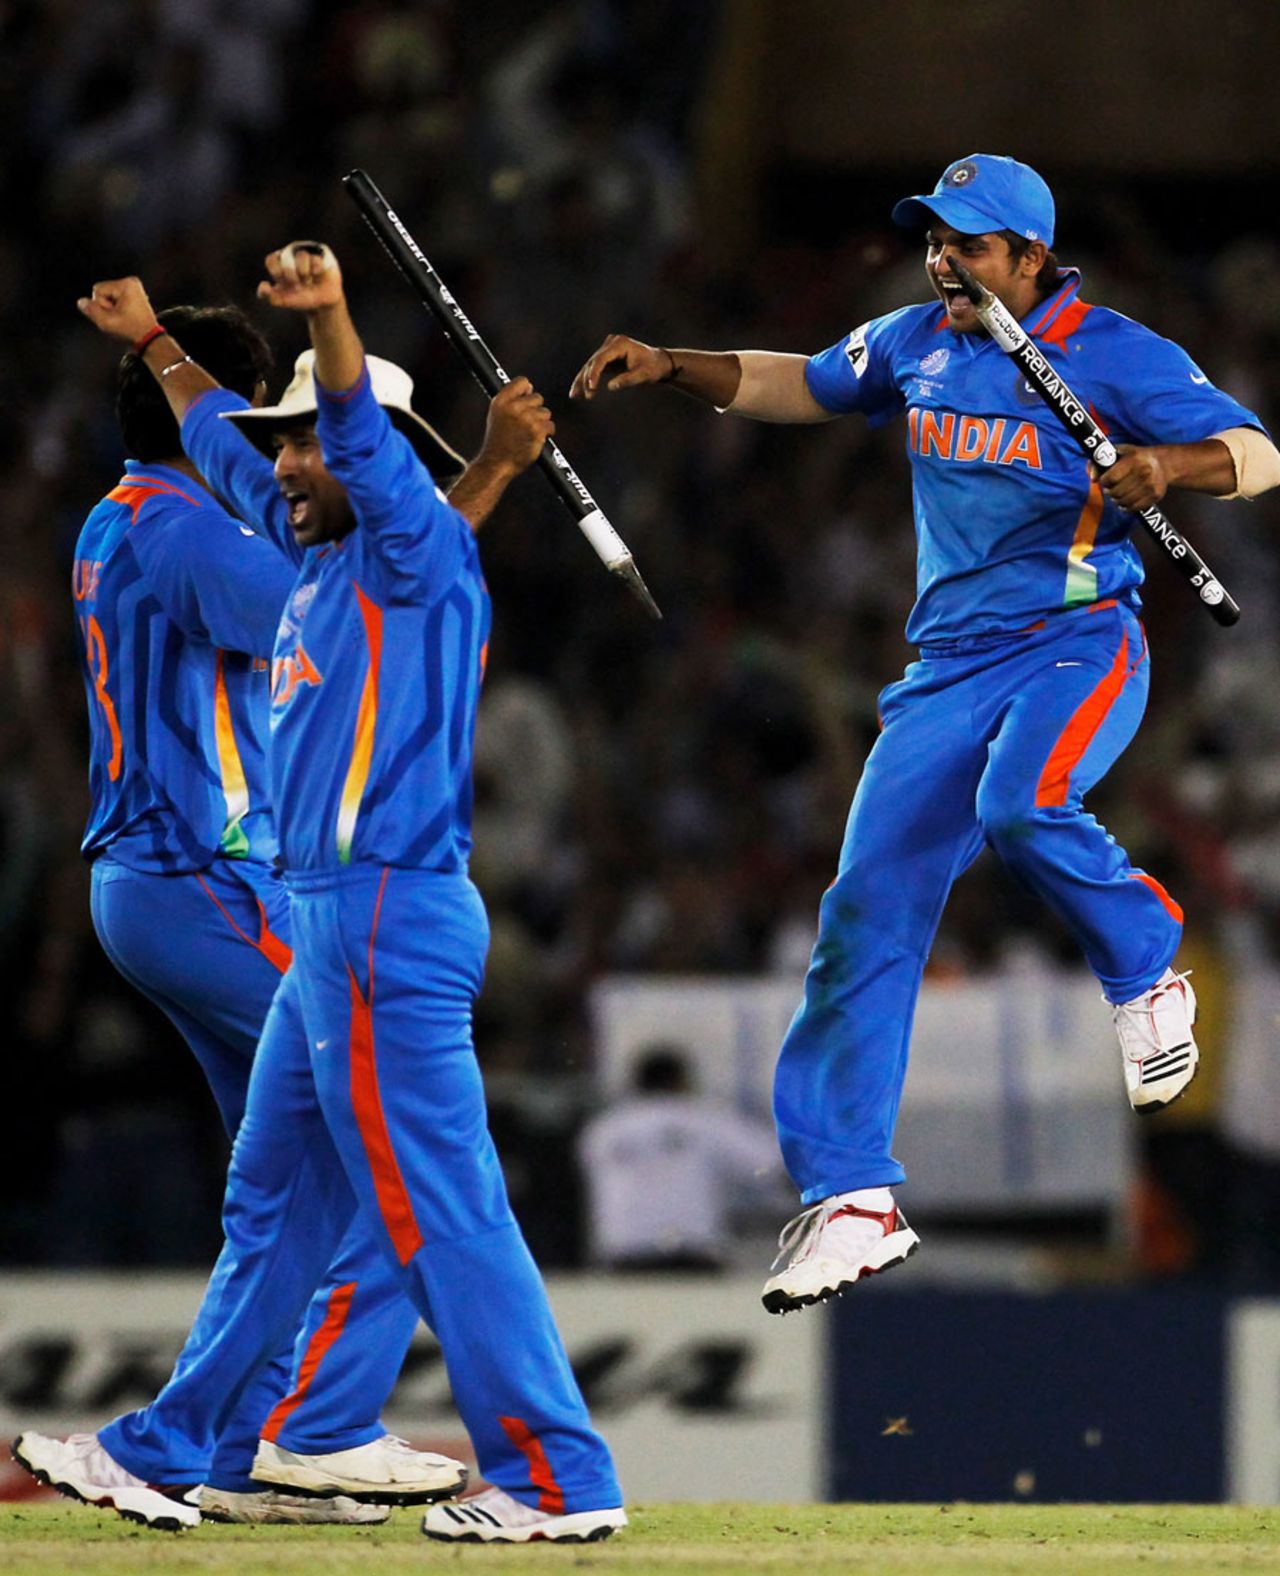 Sachin Tendulkar, Suresh Raina and Munaf Patel celebrate after India ended up winners, India v Pakistan, 2nd semi-final, World Cup 2011, Mohali, March 30, 2011